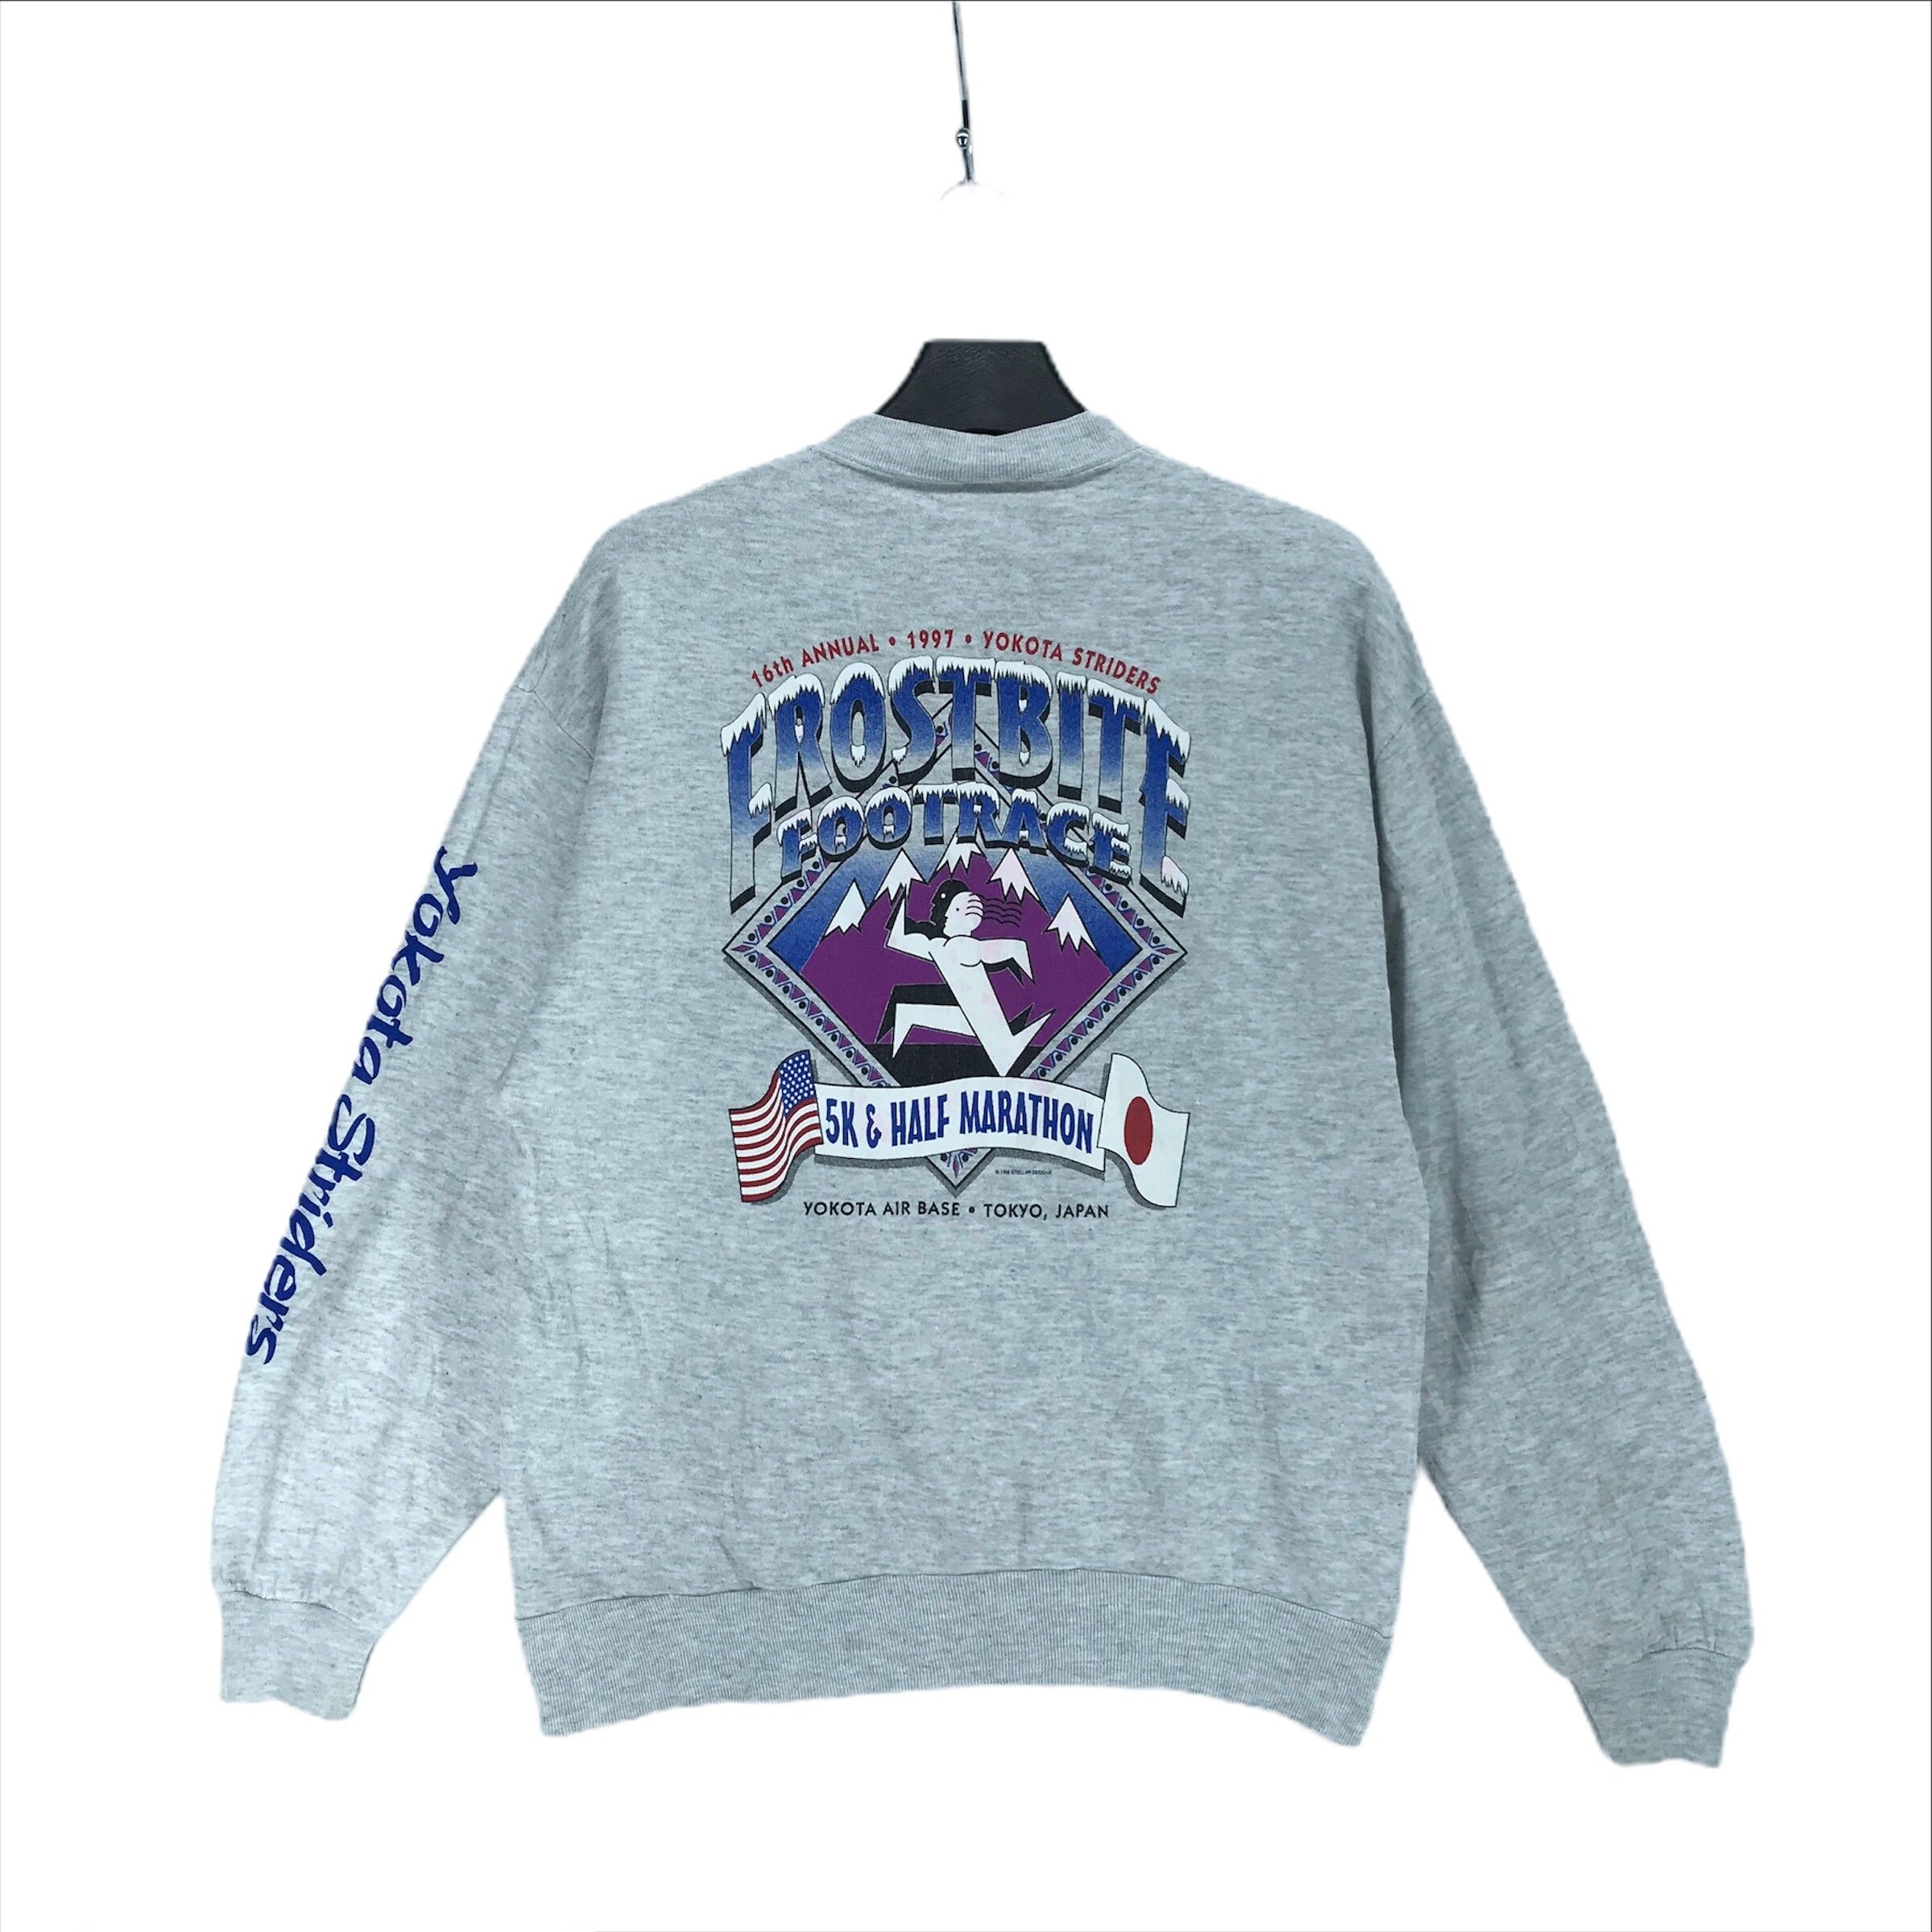 Vintage 96 Yokota Striders Running Club Sweatshirts #2169-84 - 1